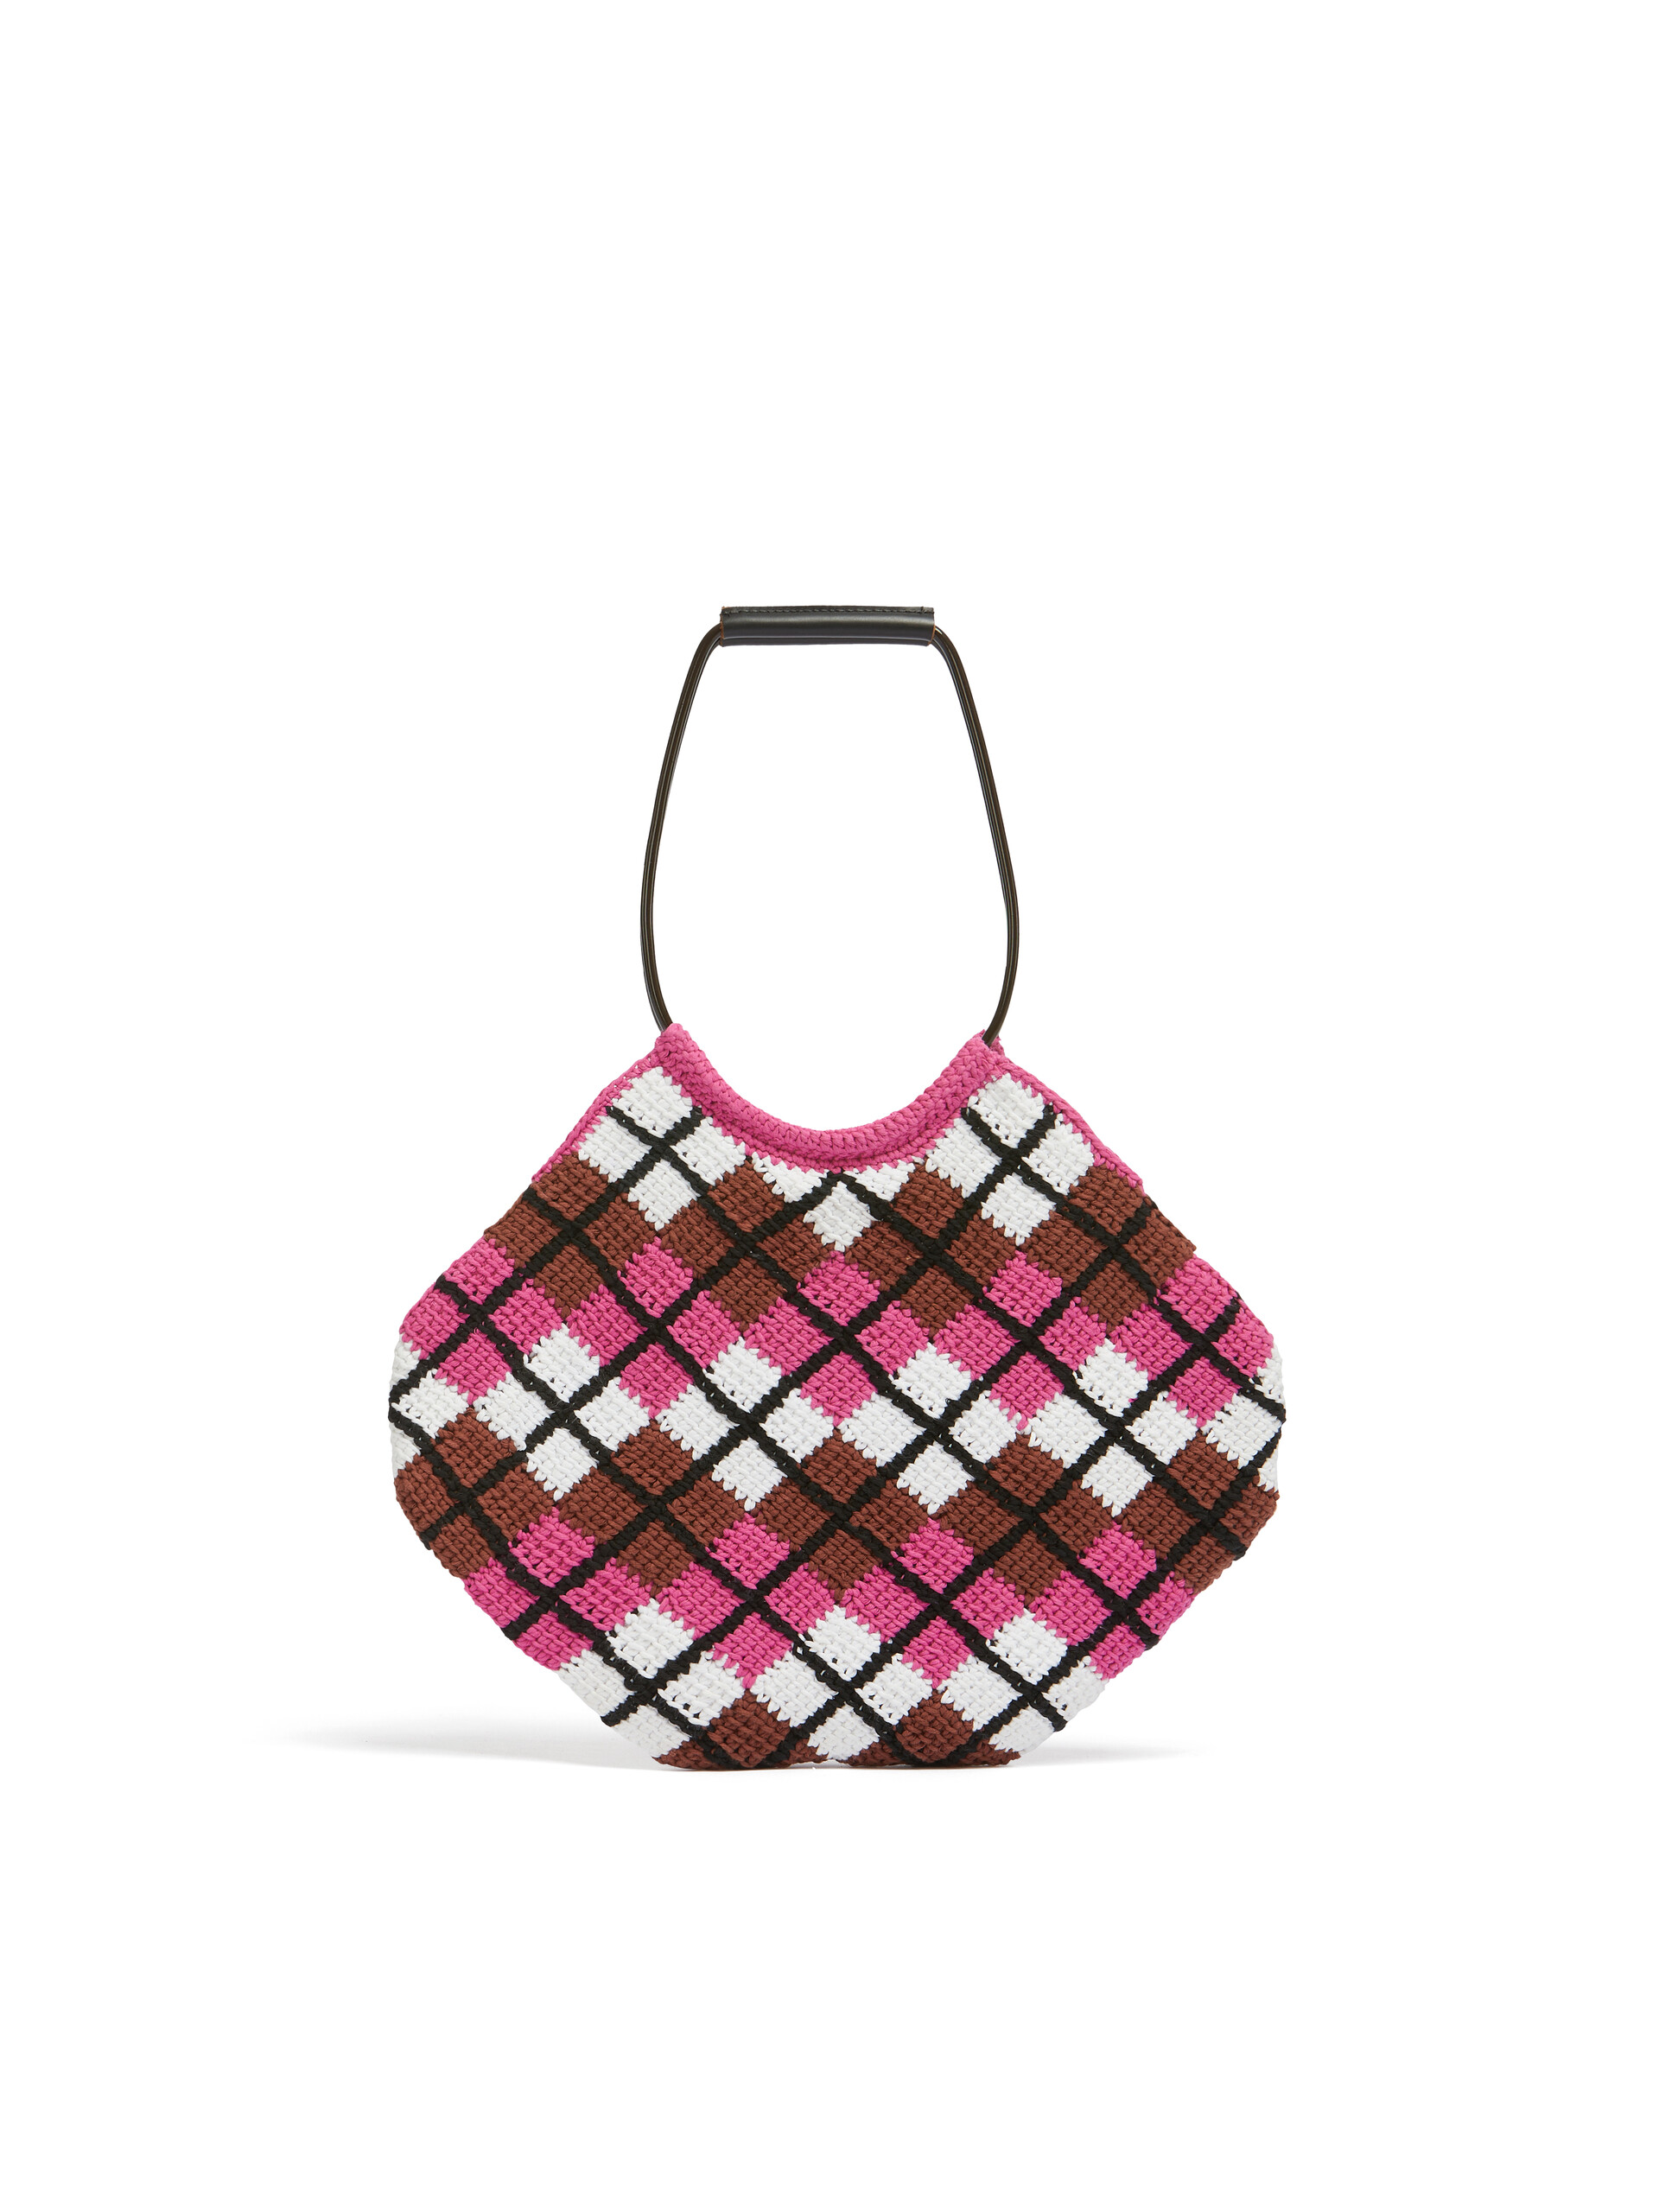 Pink rhombus cotton knit MARNI MARKET handbag - Shopping Bags - Image 3